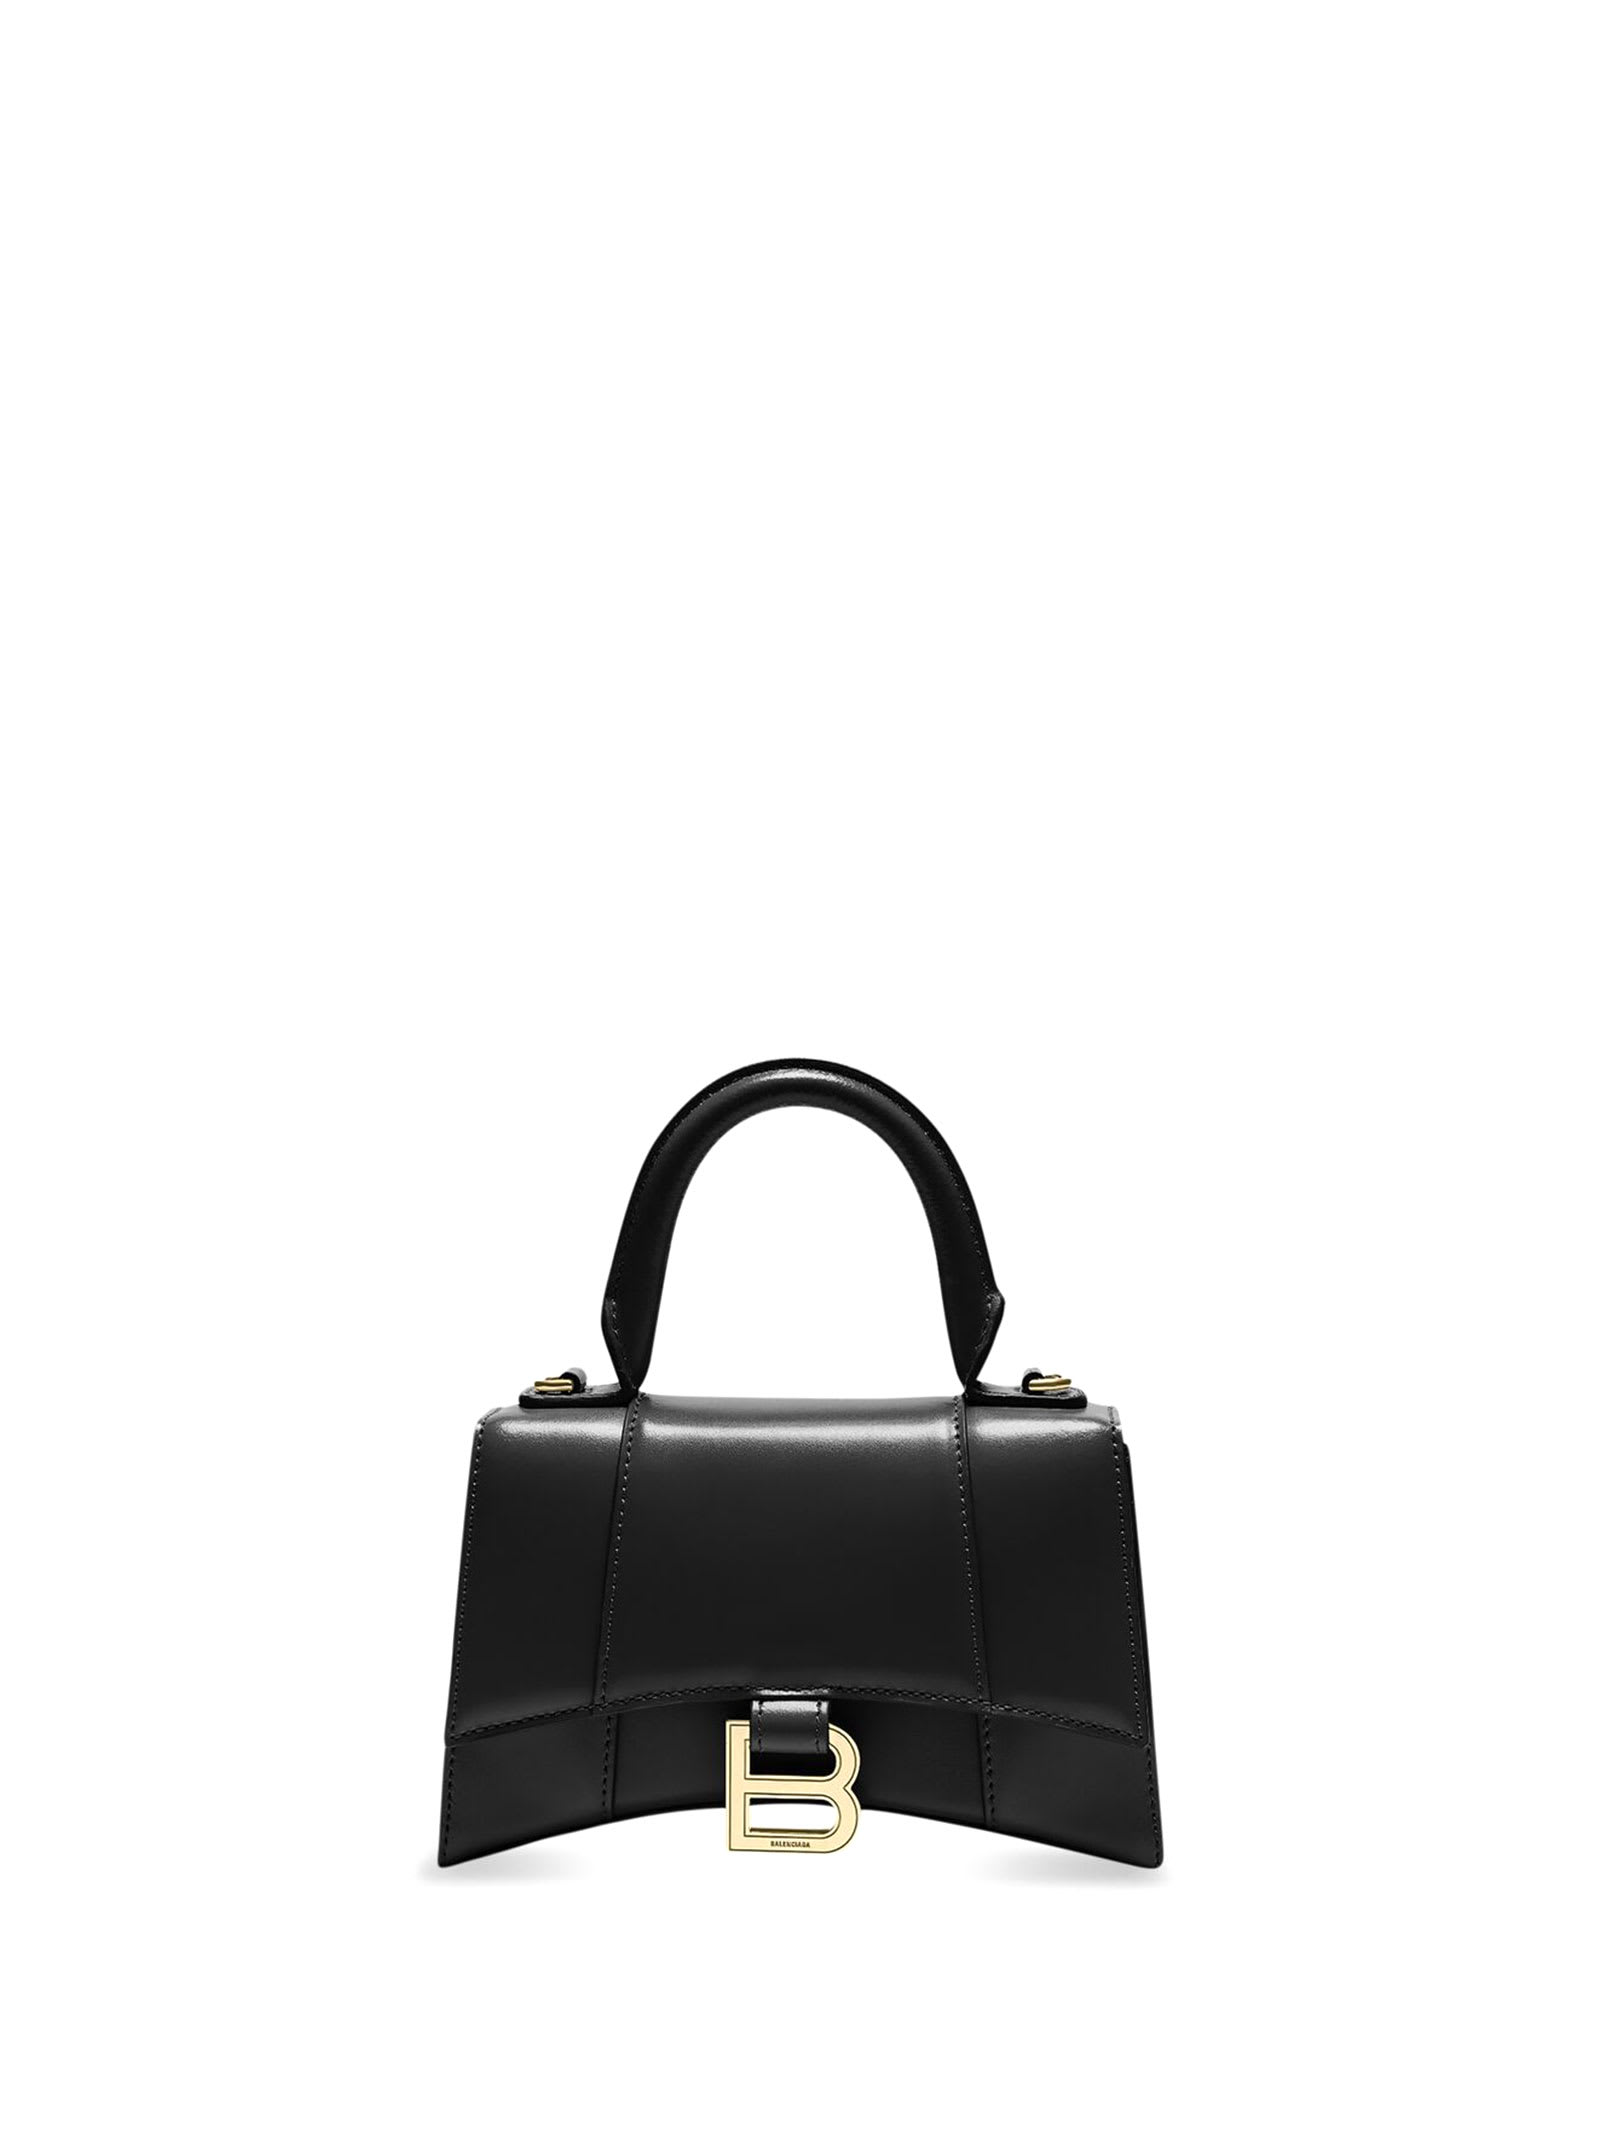 Balenciaga Hourglass Handbag In Shiny Leather